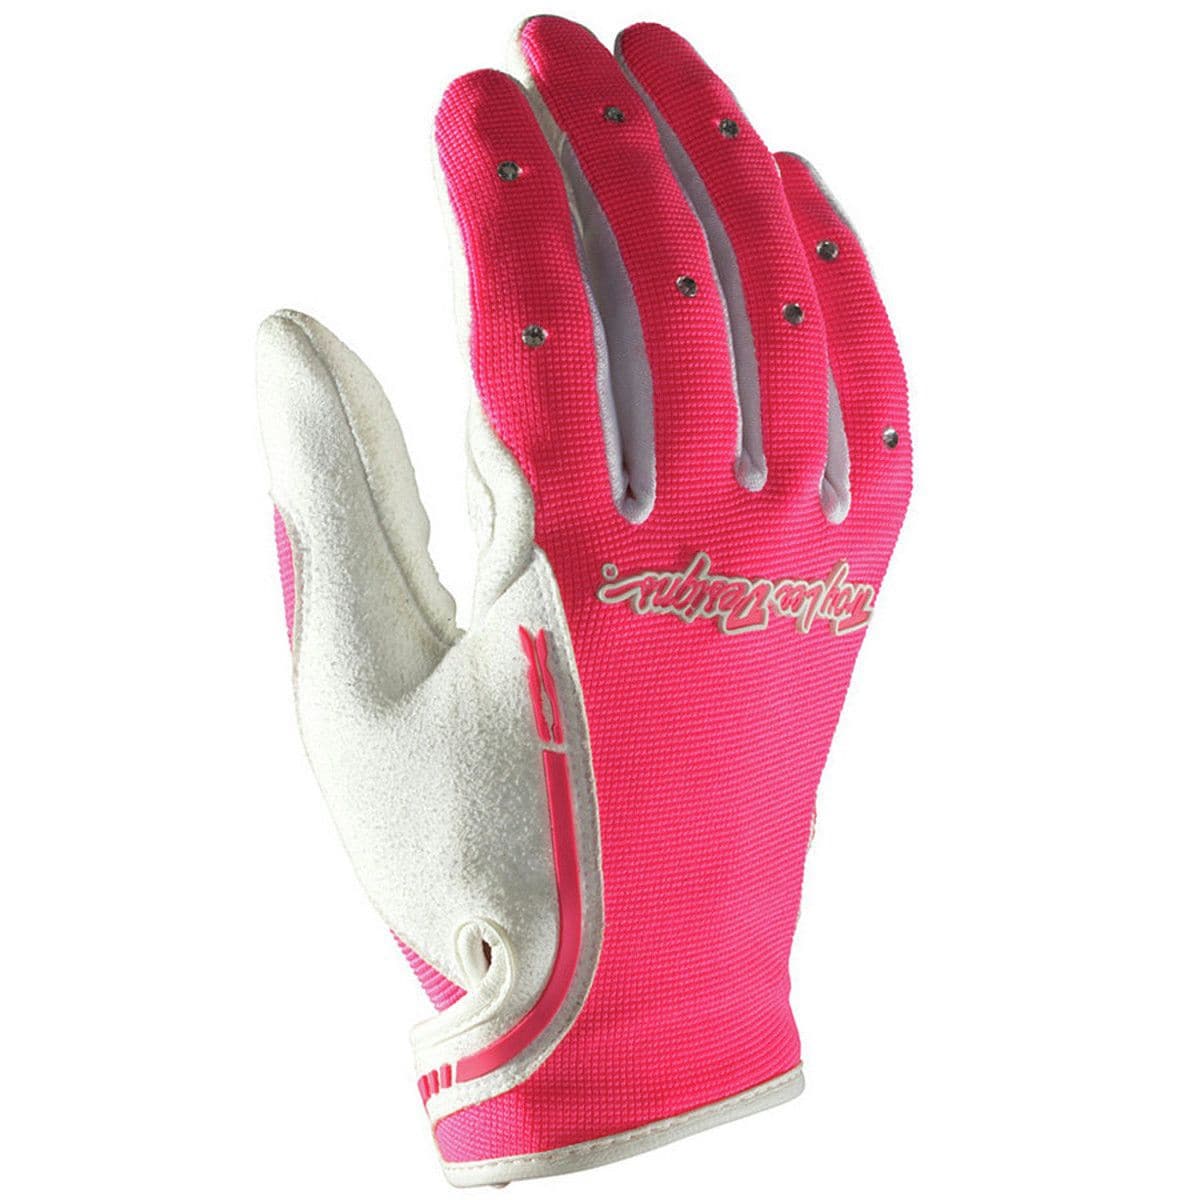 Troy Lee Designs XC Glove - Women's